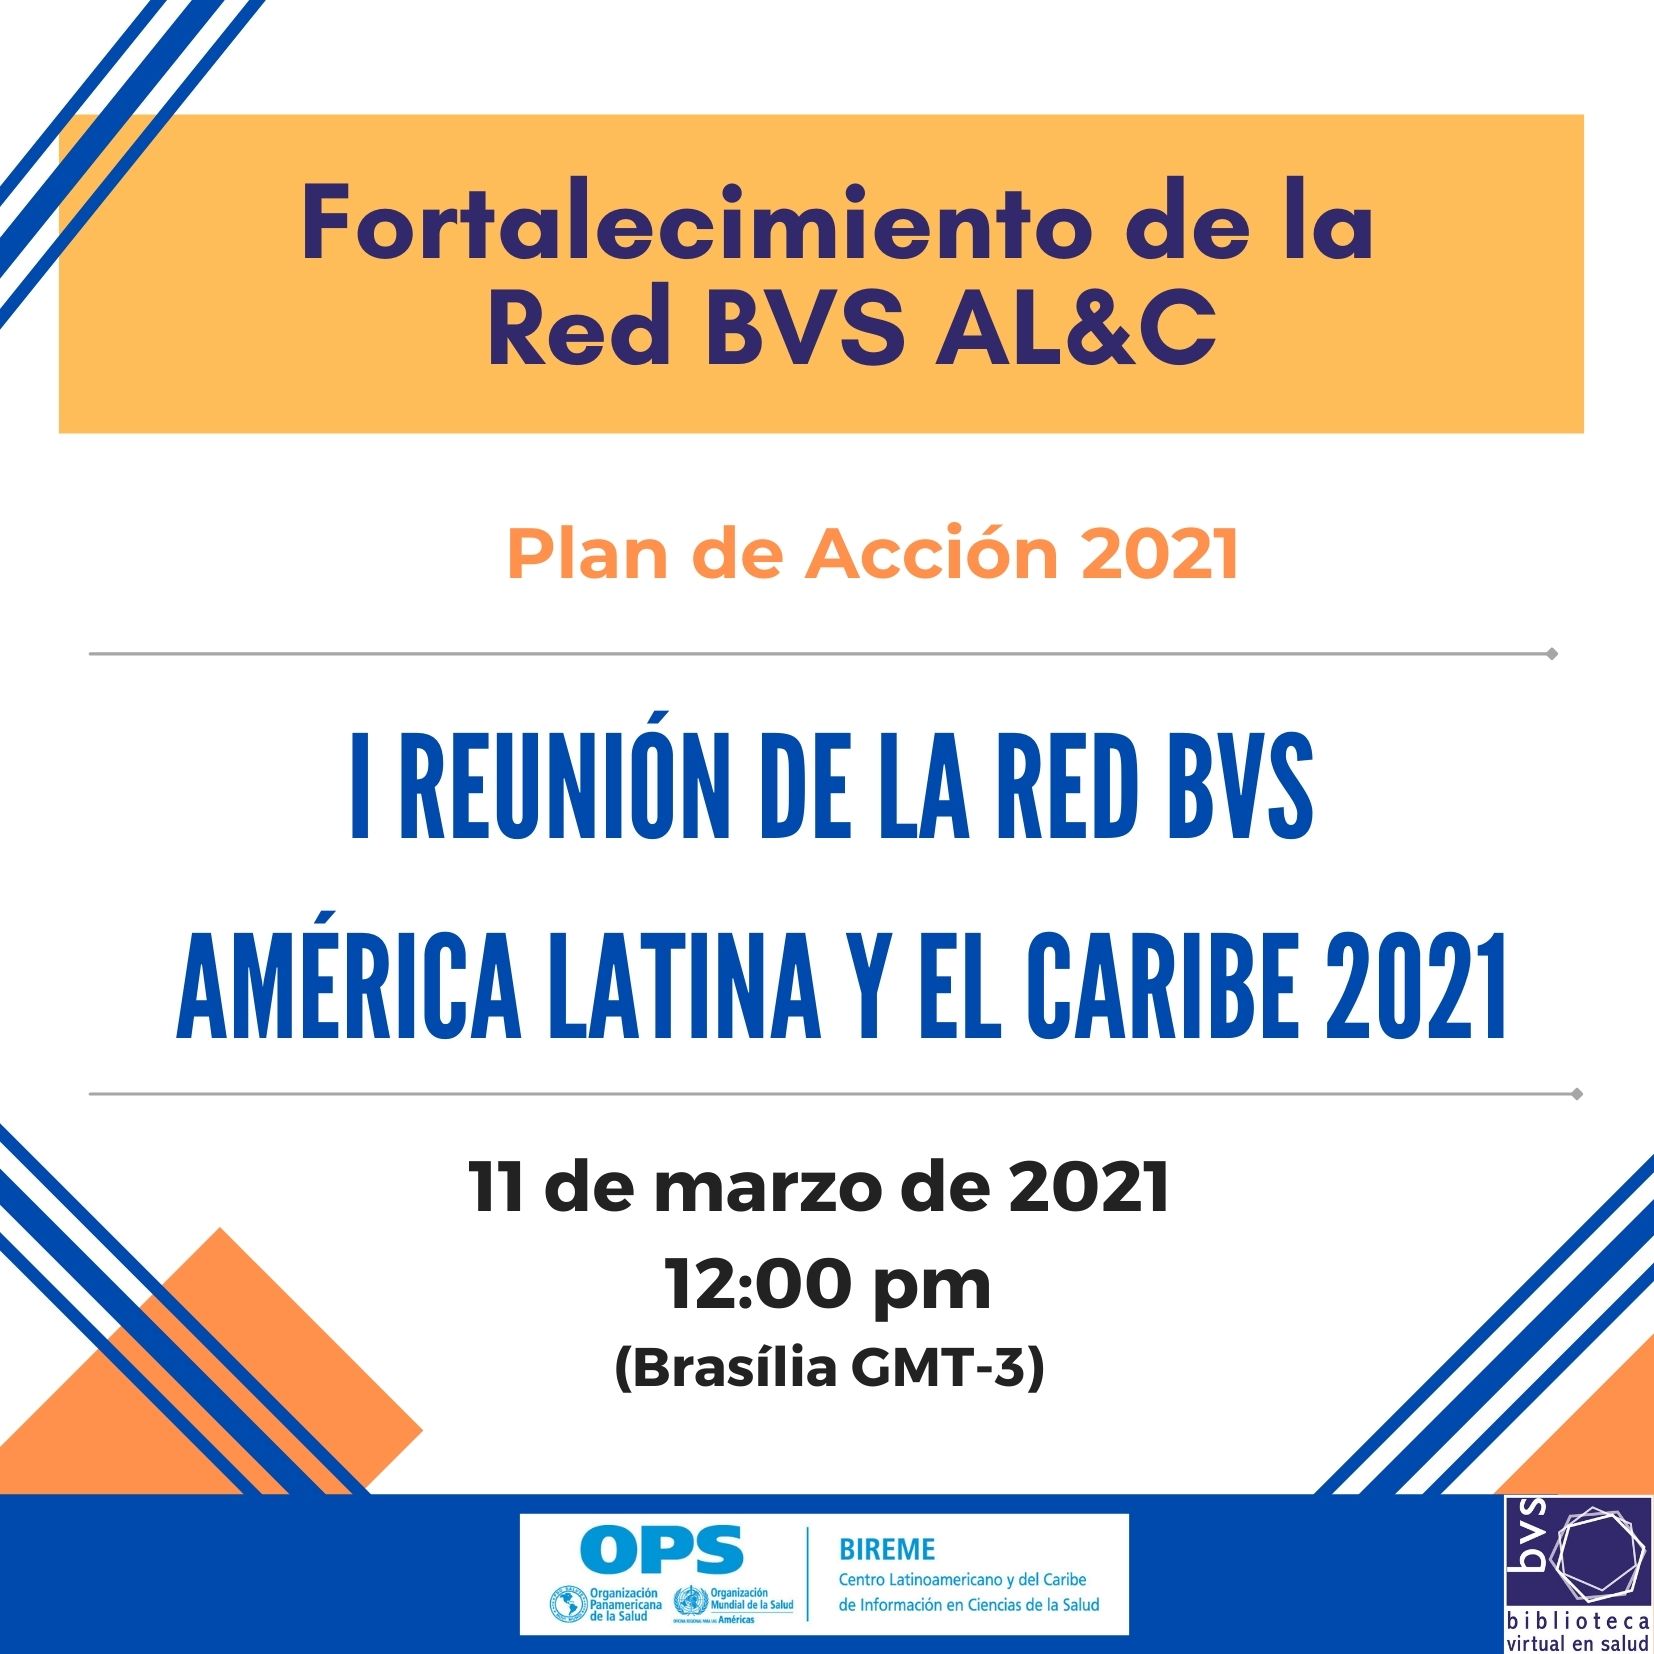 Destacado-Plan-Accion-2021-RedBVS-ALC